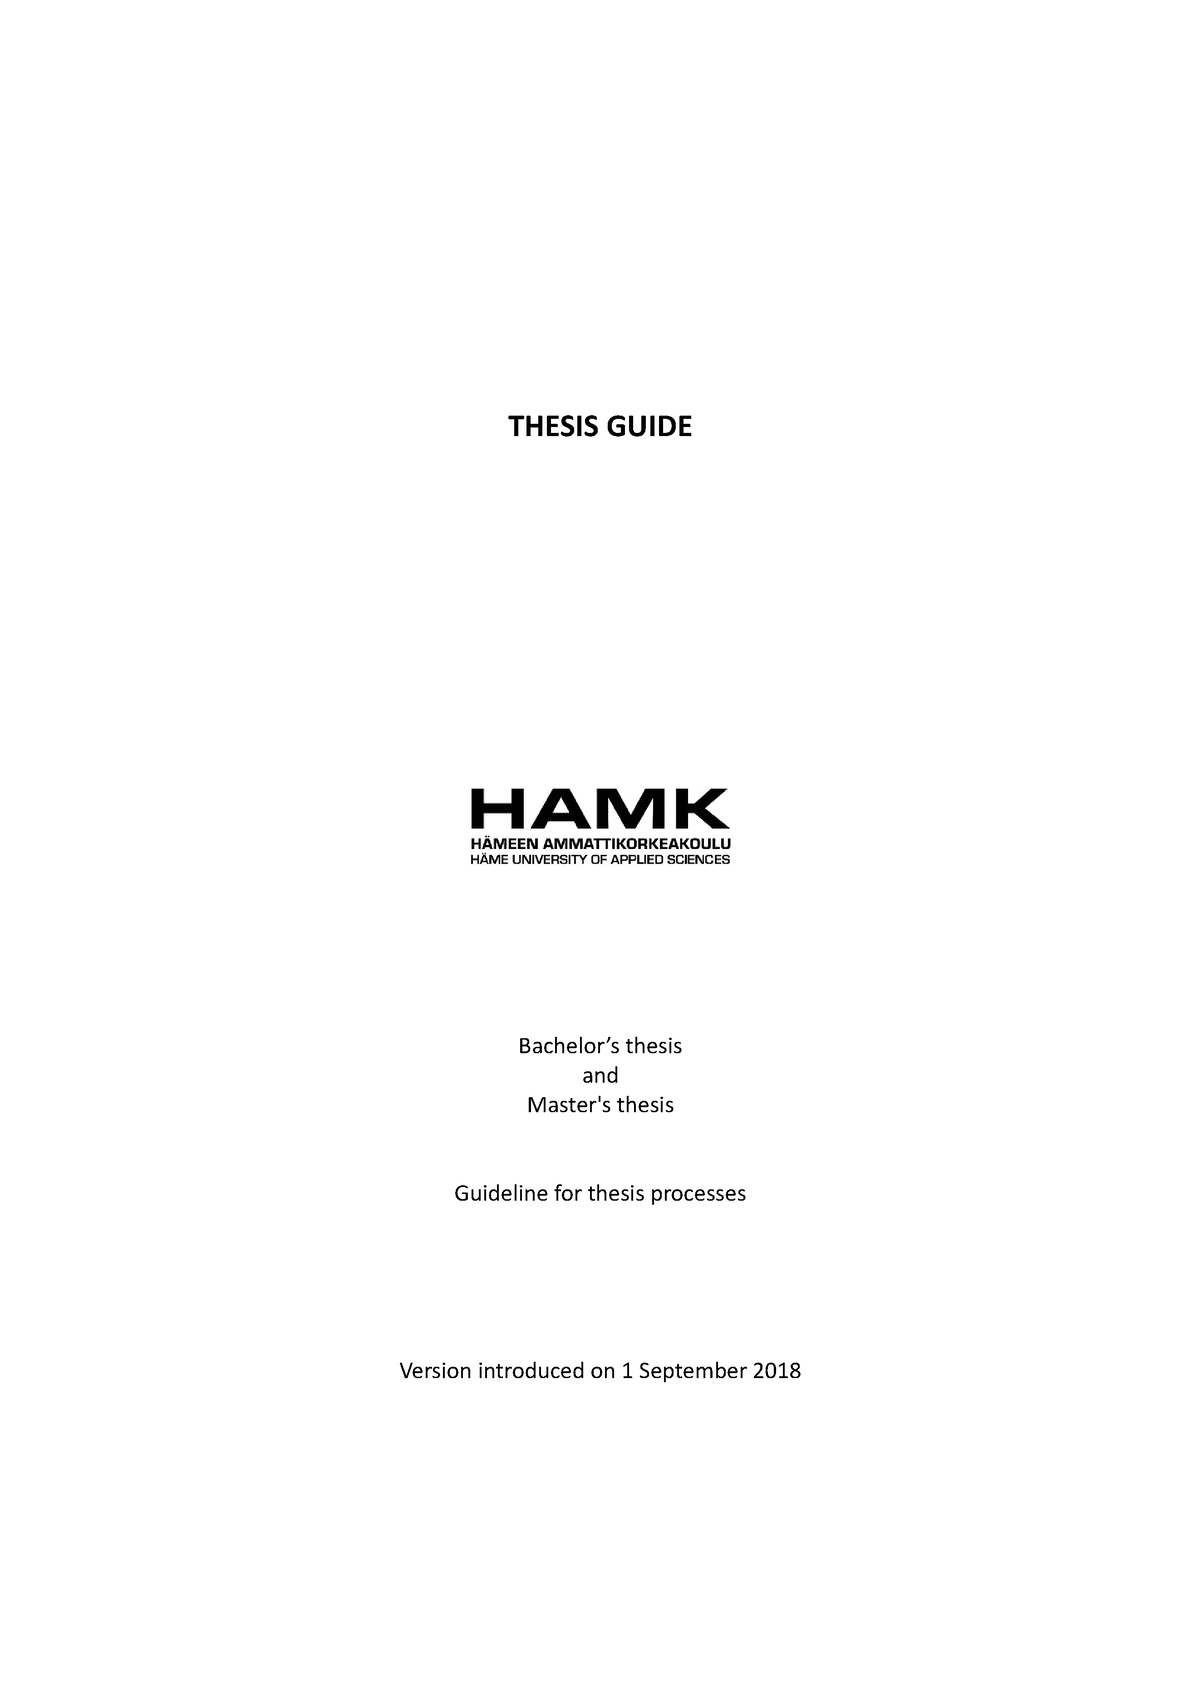 thesis guide hamk